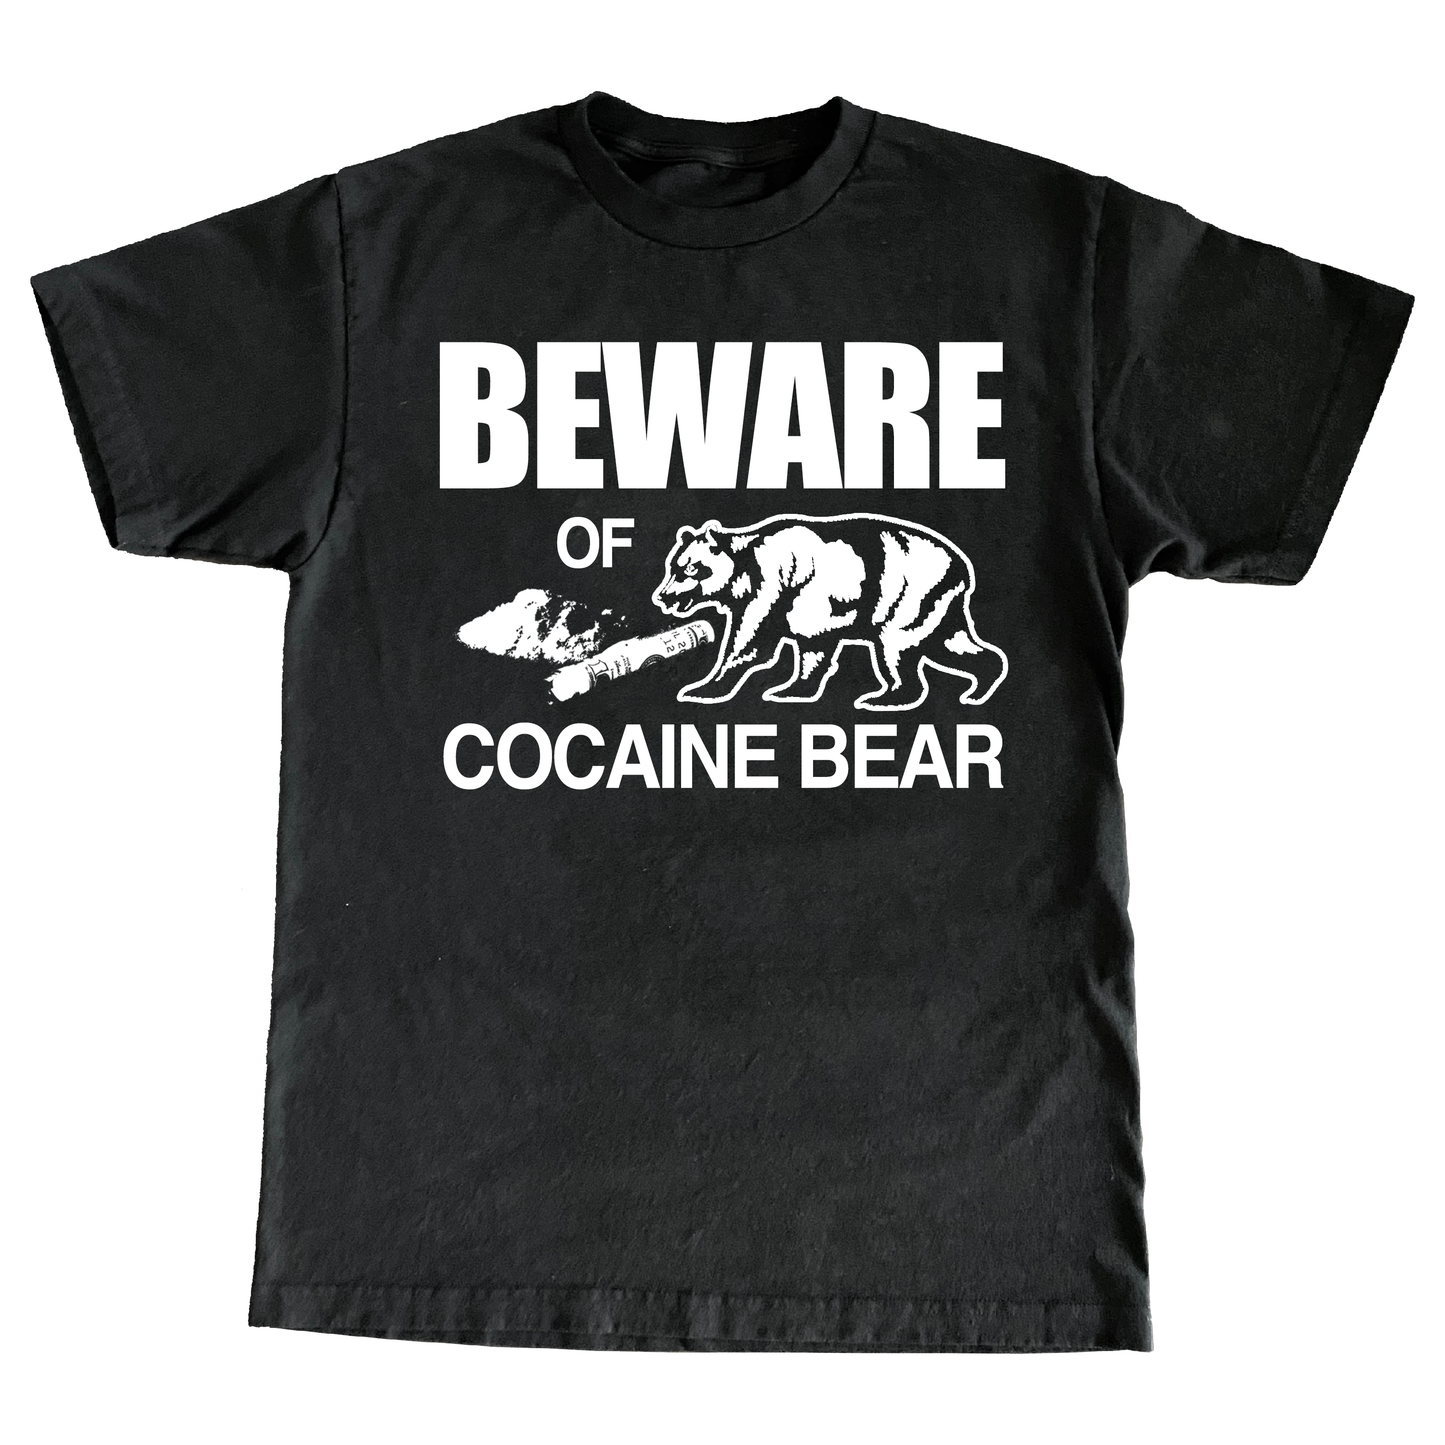 "COCAINE BEAR" Tshirt